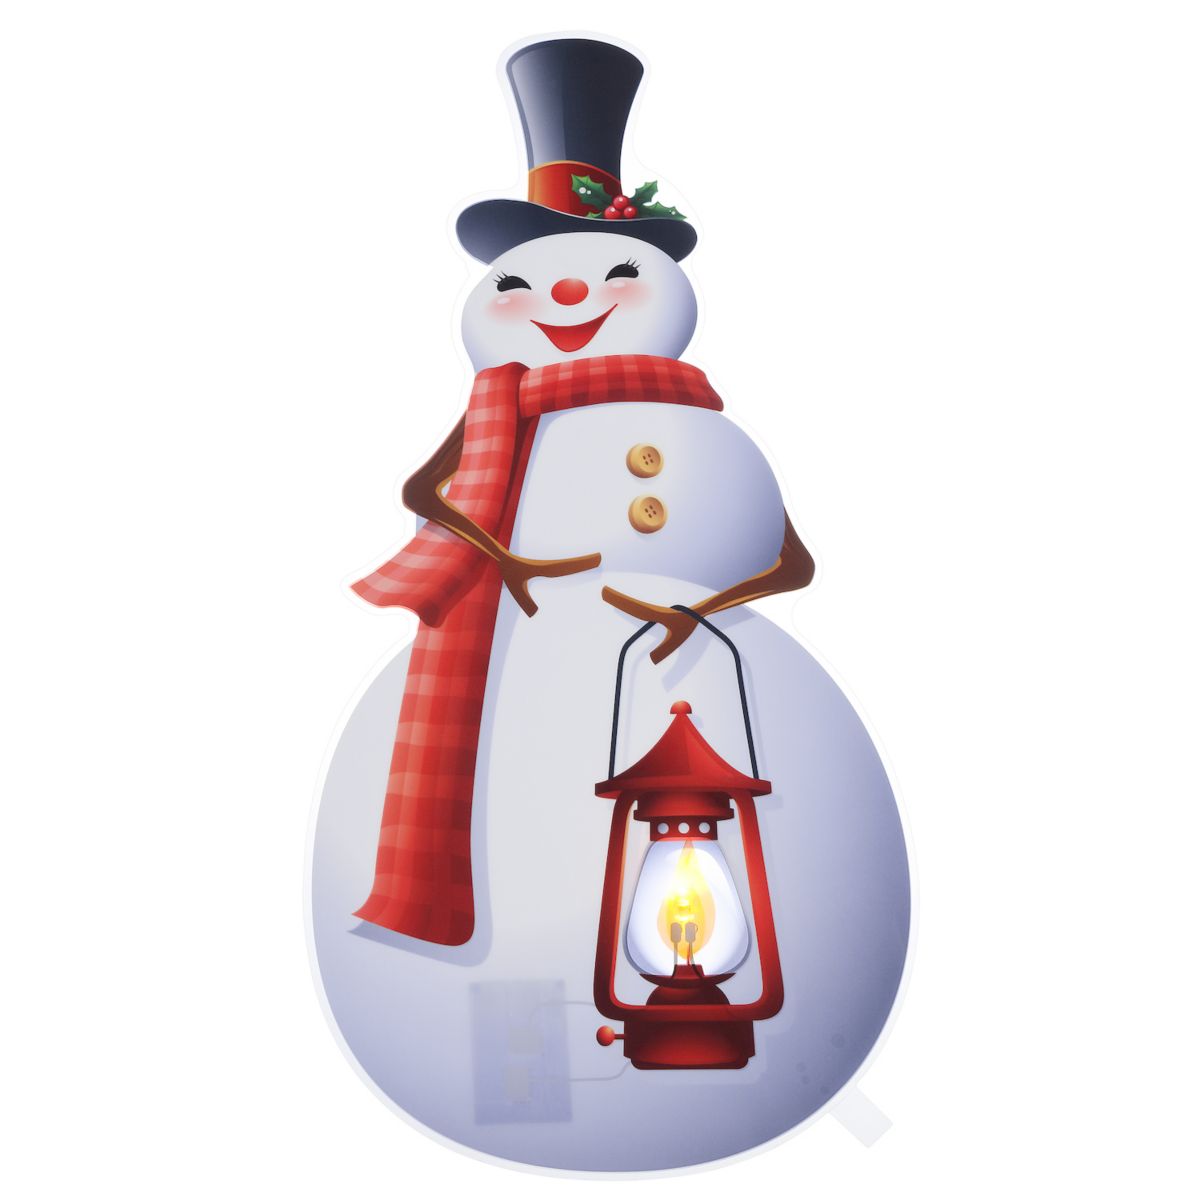 Mr. Christmas Window Decal Snowman Mr Christmas